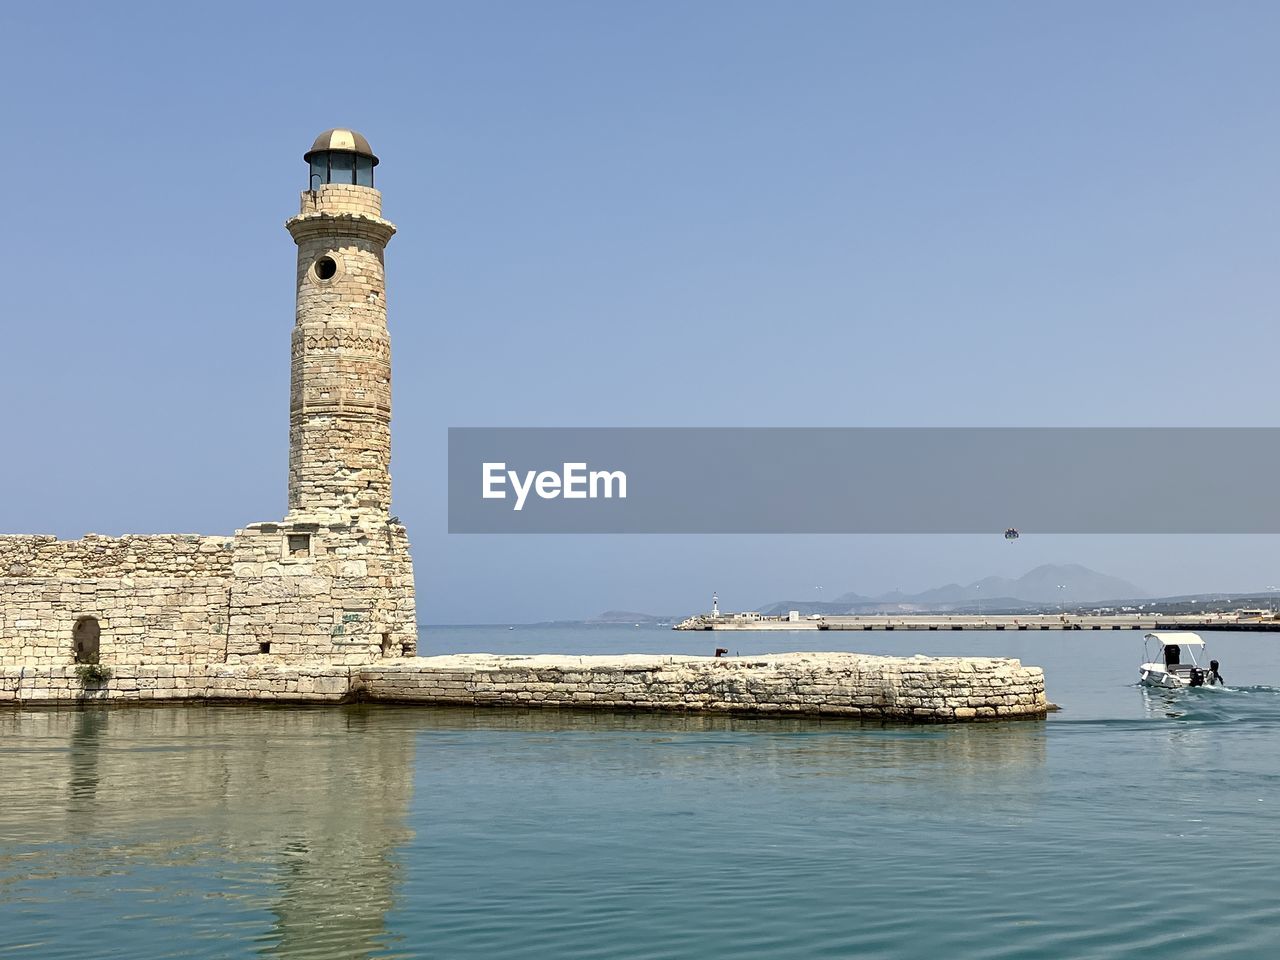 lighthouse by sea against clear blue sky